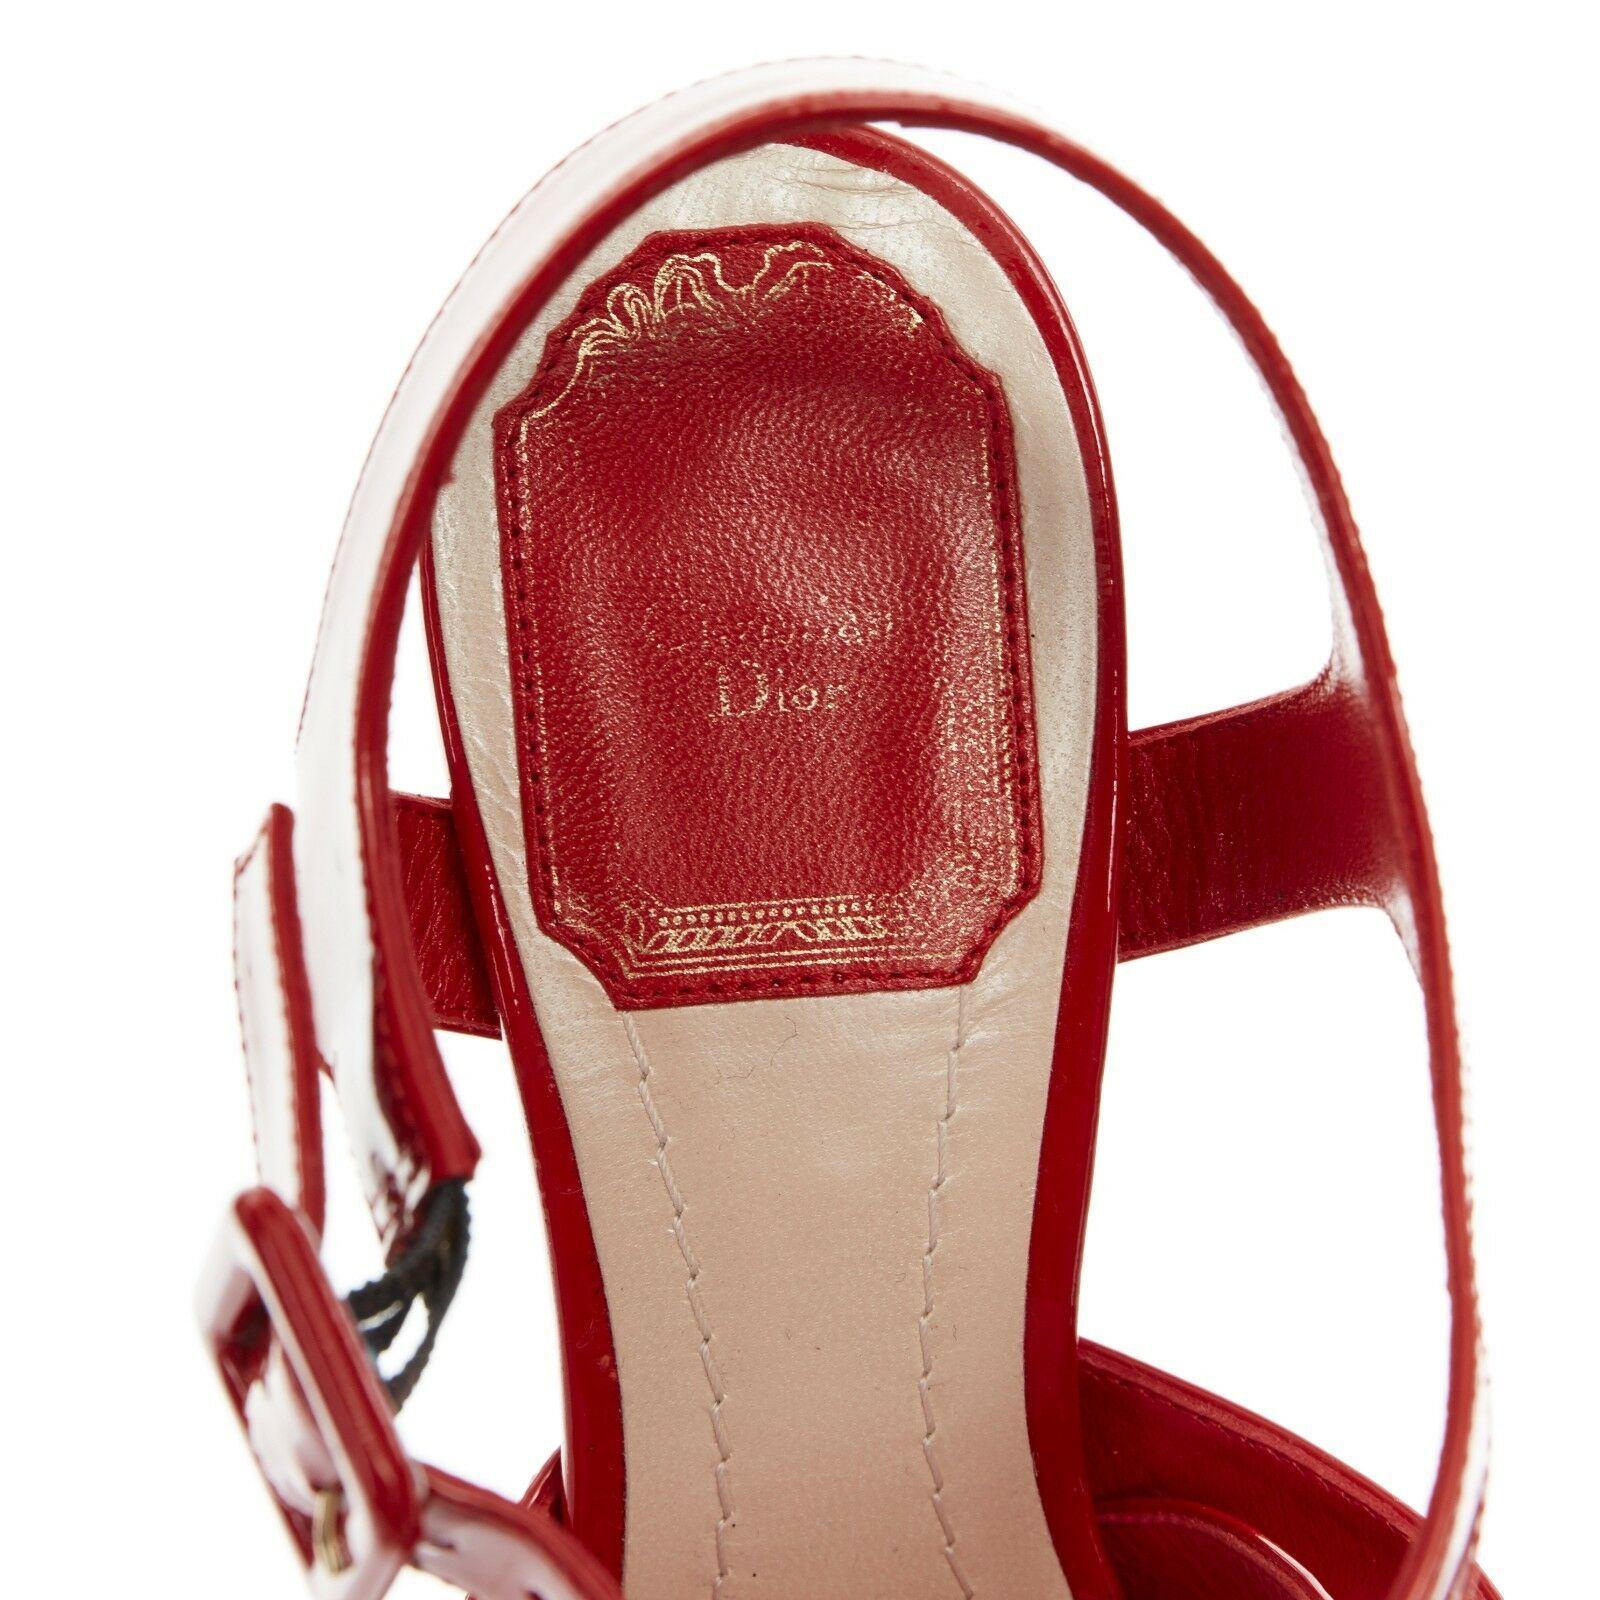 CHRISTIAN DIOR Cannage red patent strappy platform gold metal sandal heel EU35 3